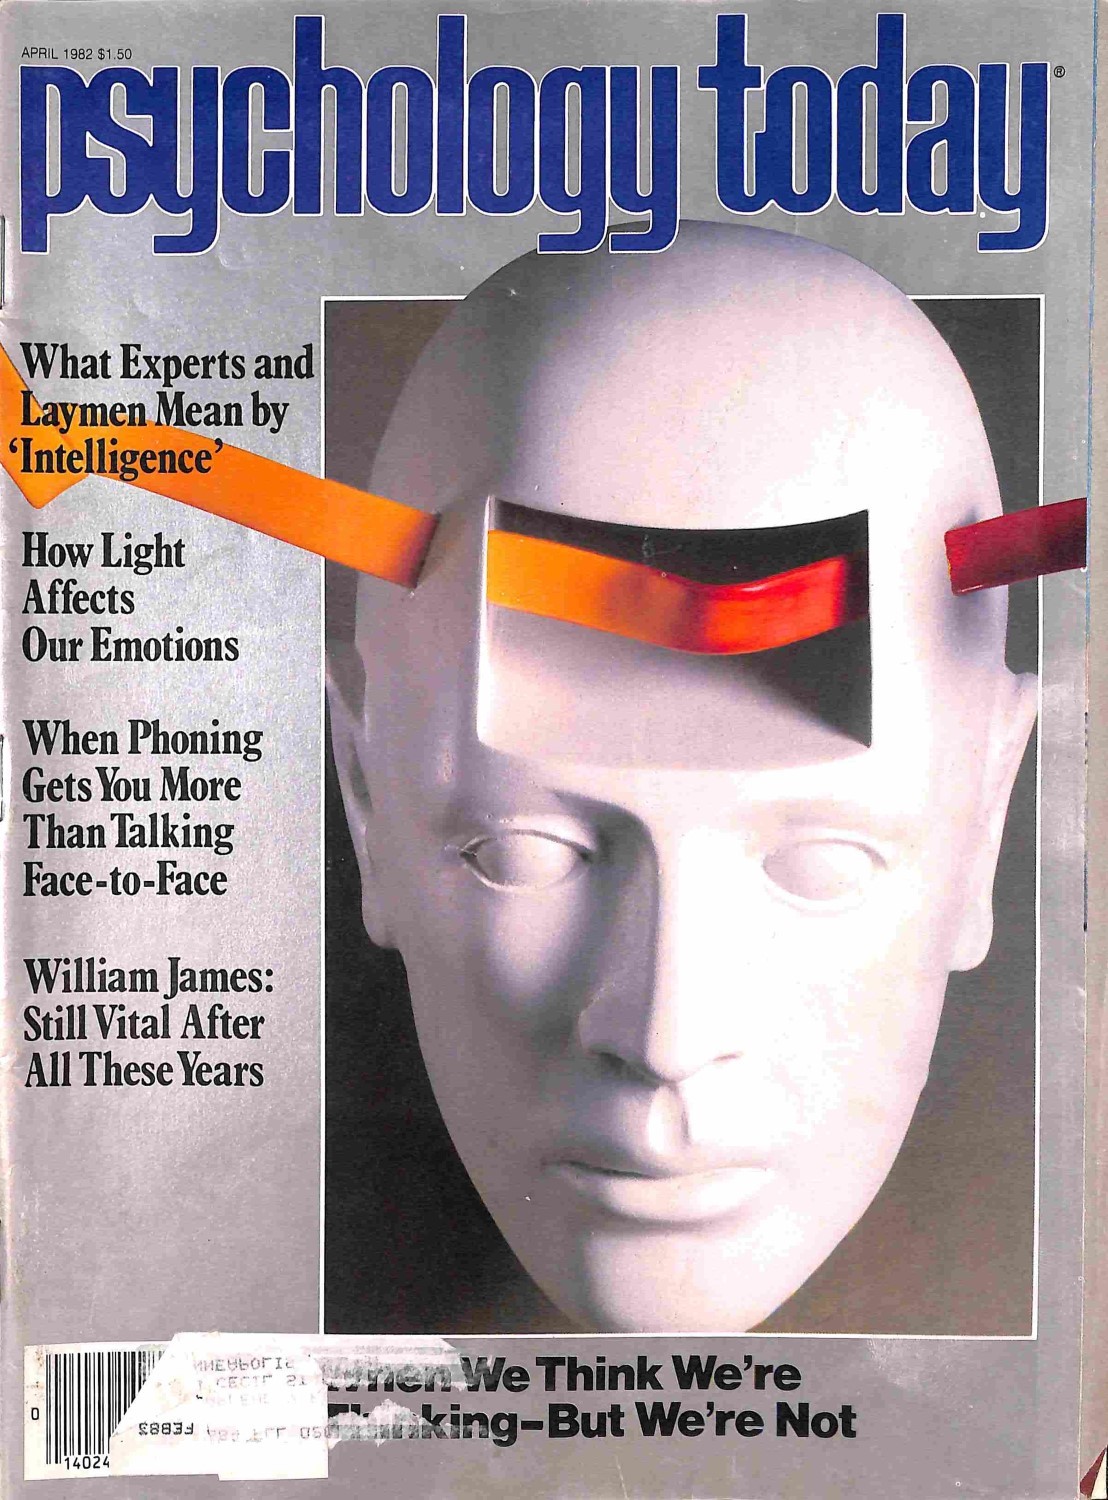 pychology today magazzine warped reality